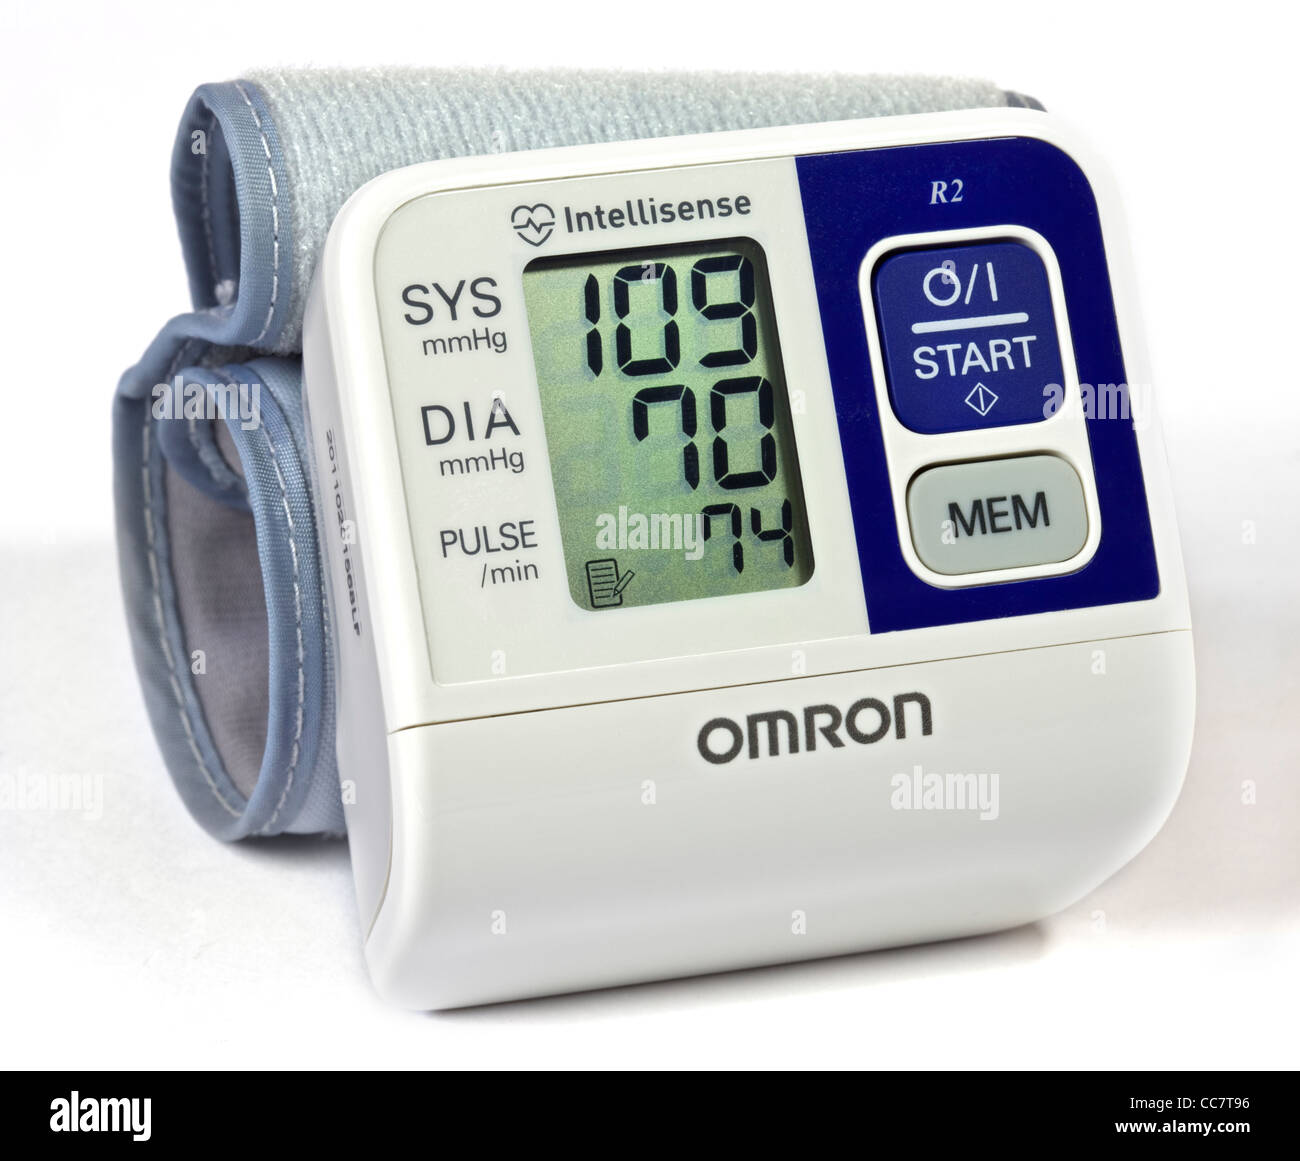 Omron EVOLV upper arm wireless blood pressure monitor Stock Photo - Alamy